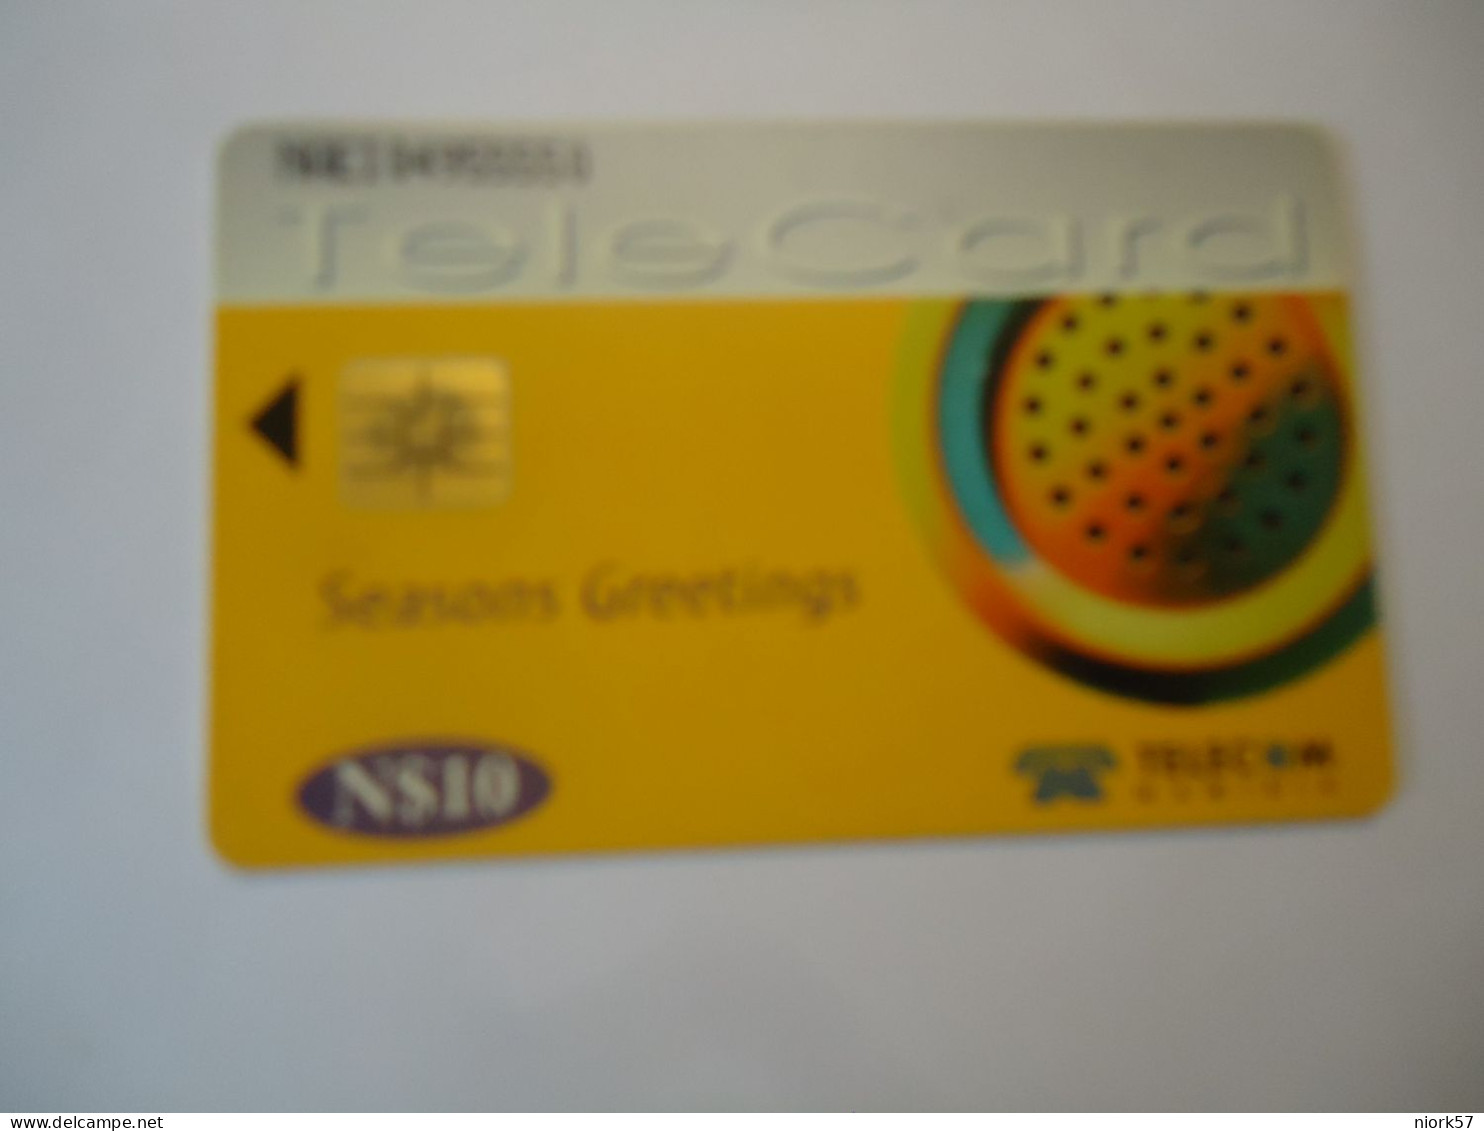 NAMIBIA   USED CARDS   ADVERSTISING  TELEPHONES - Namibië